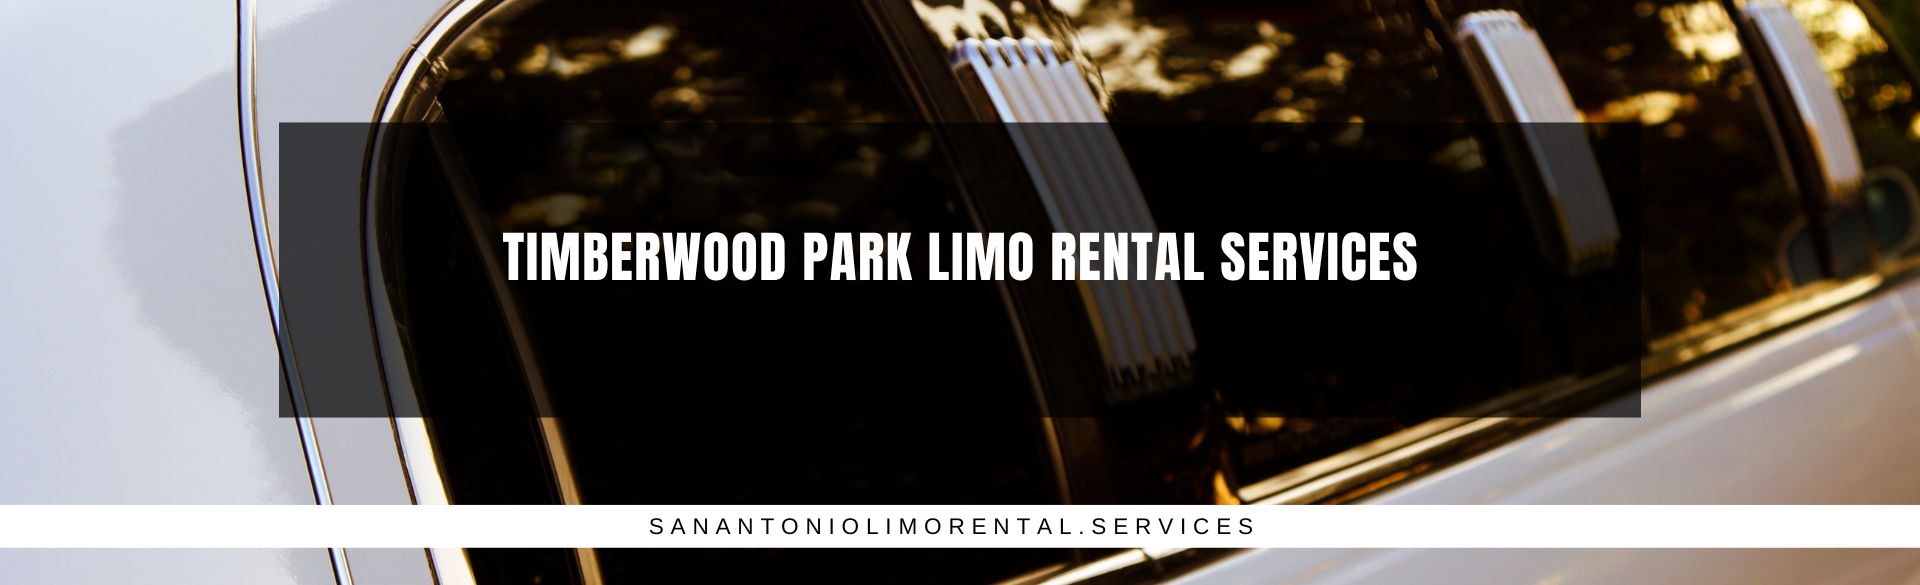 Timberwood Park Limo Rental Services